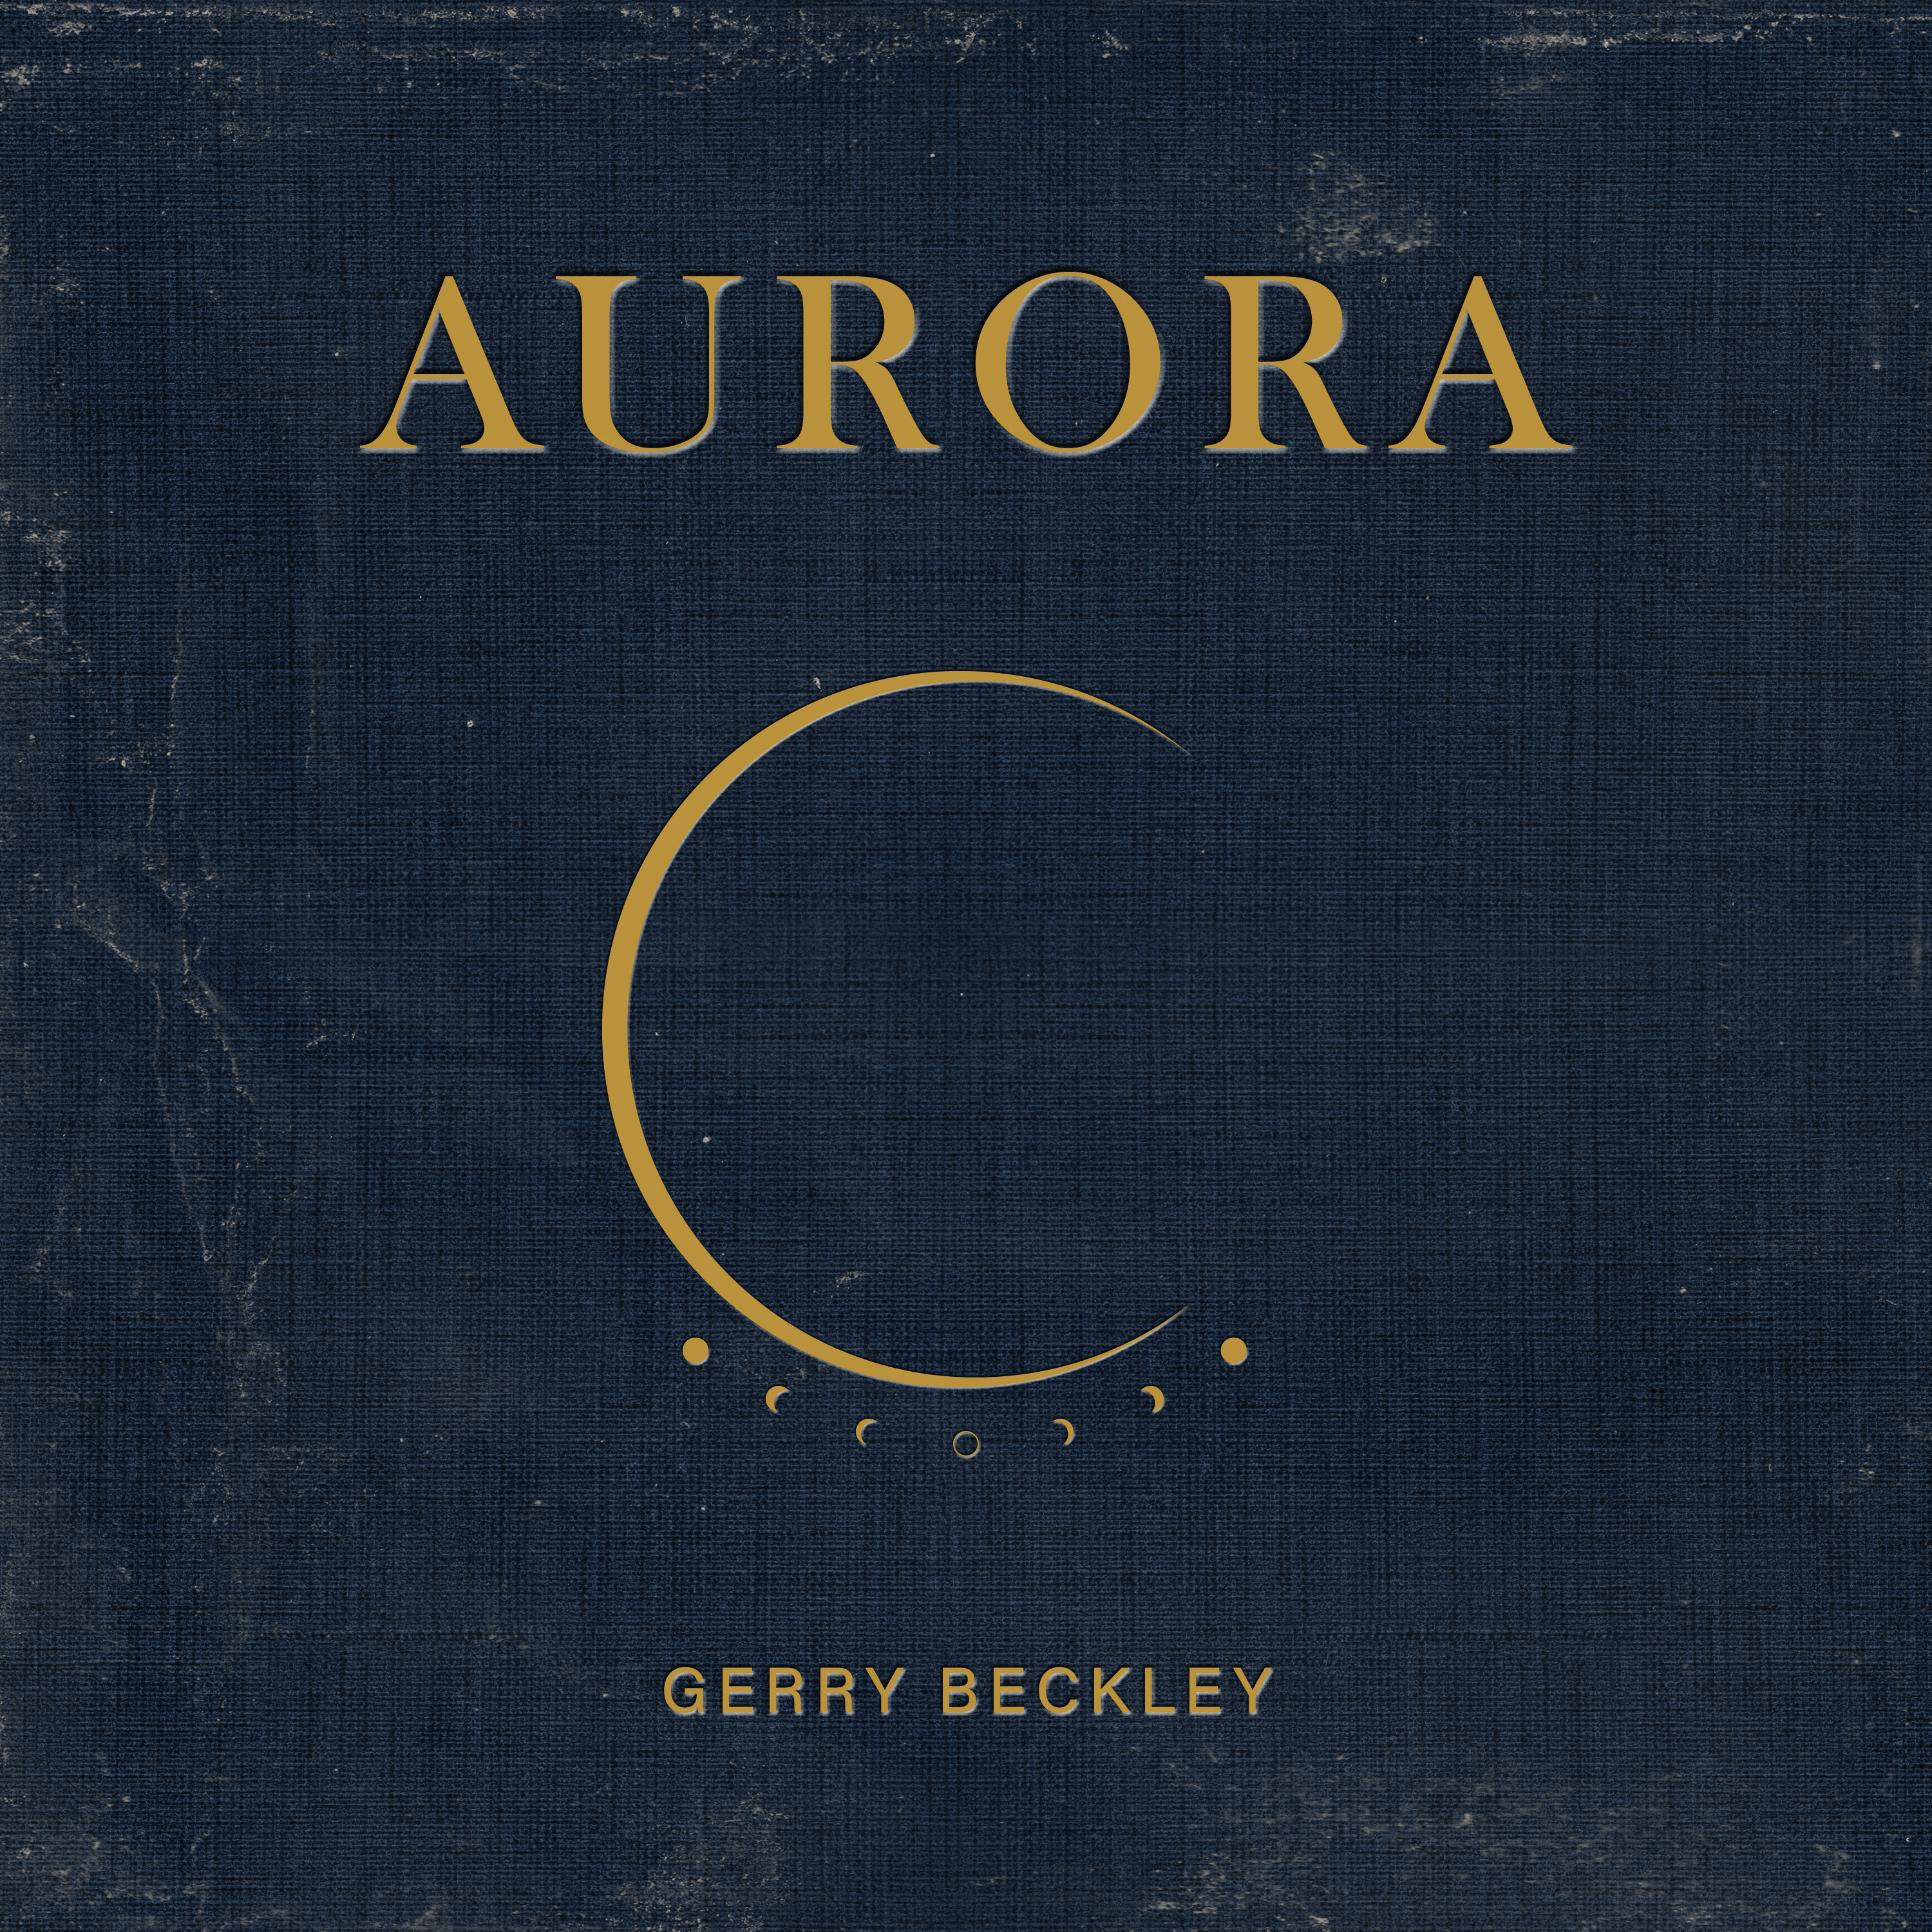 America's GERRY BECKLEY Sets Release of New Solo Studio Album - “Aurora”